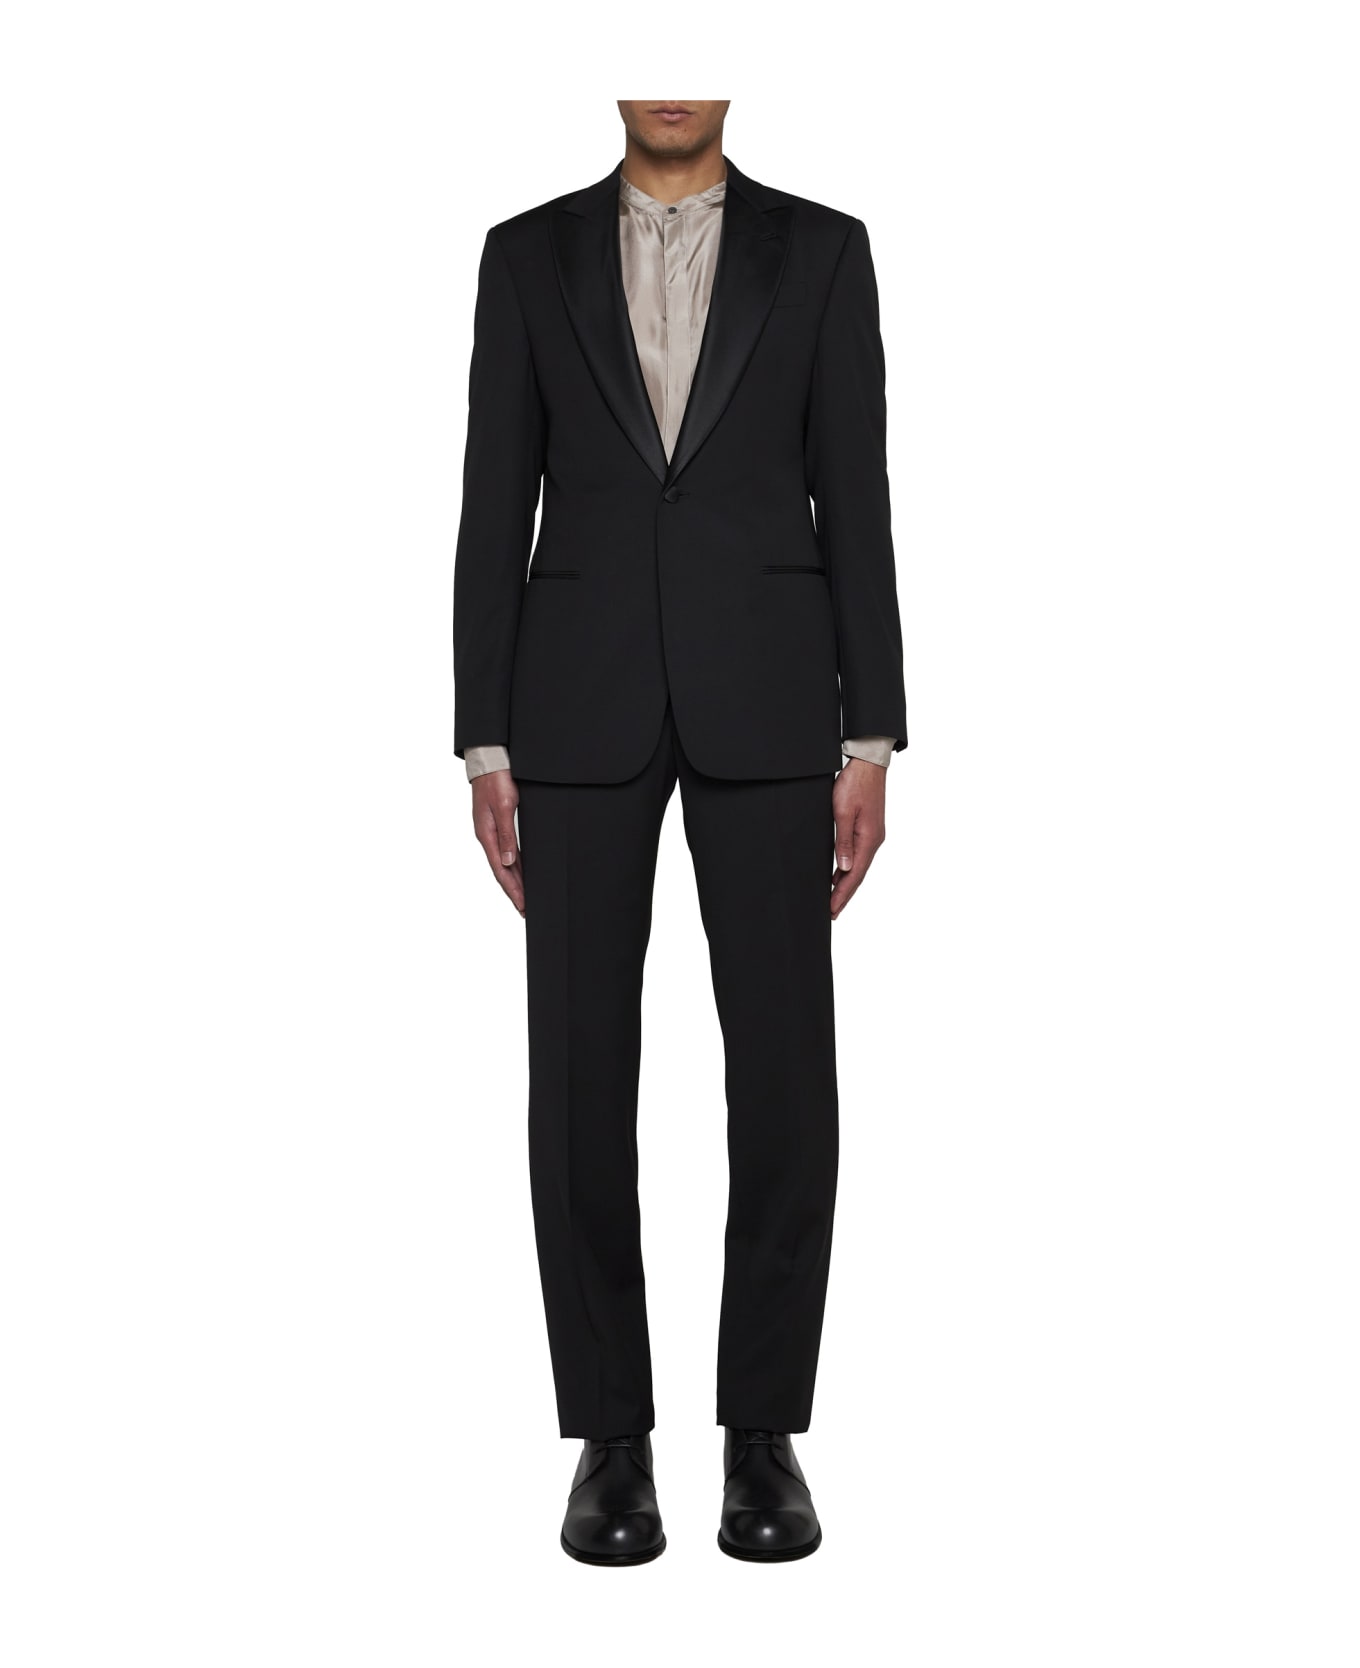 Giorgio Armani Suit - Black beauty